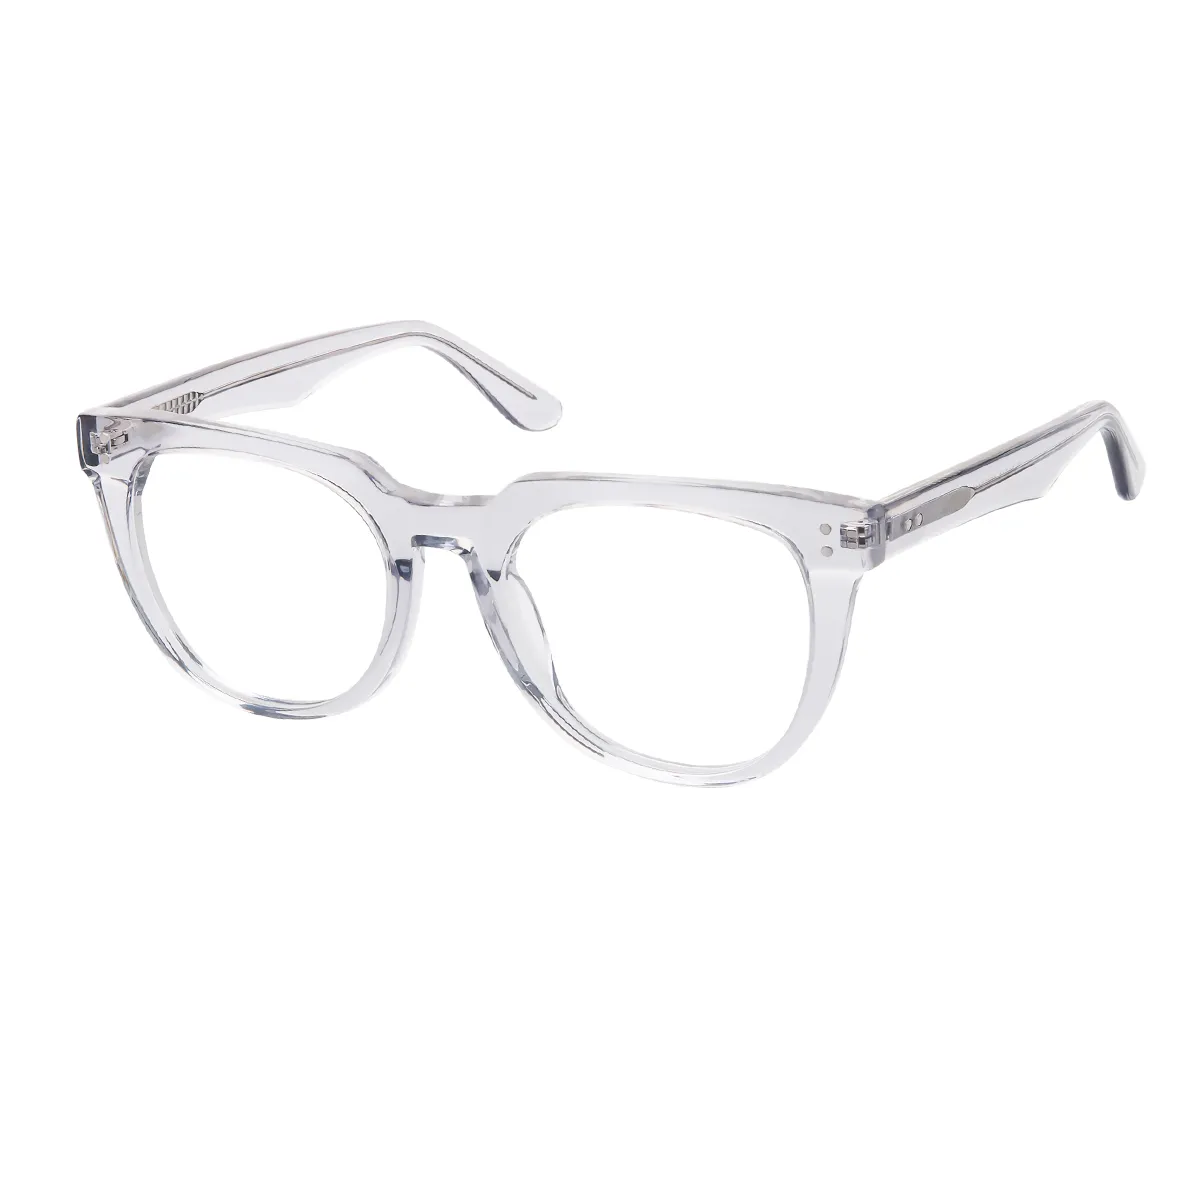 Dara - Square Translucent Gray Glasses for Men & Women